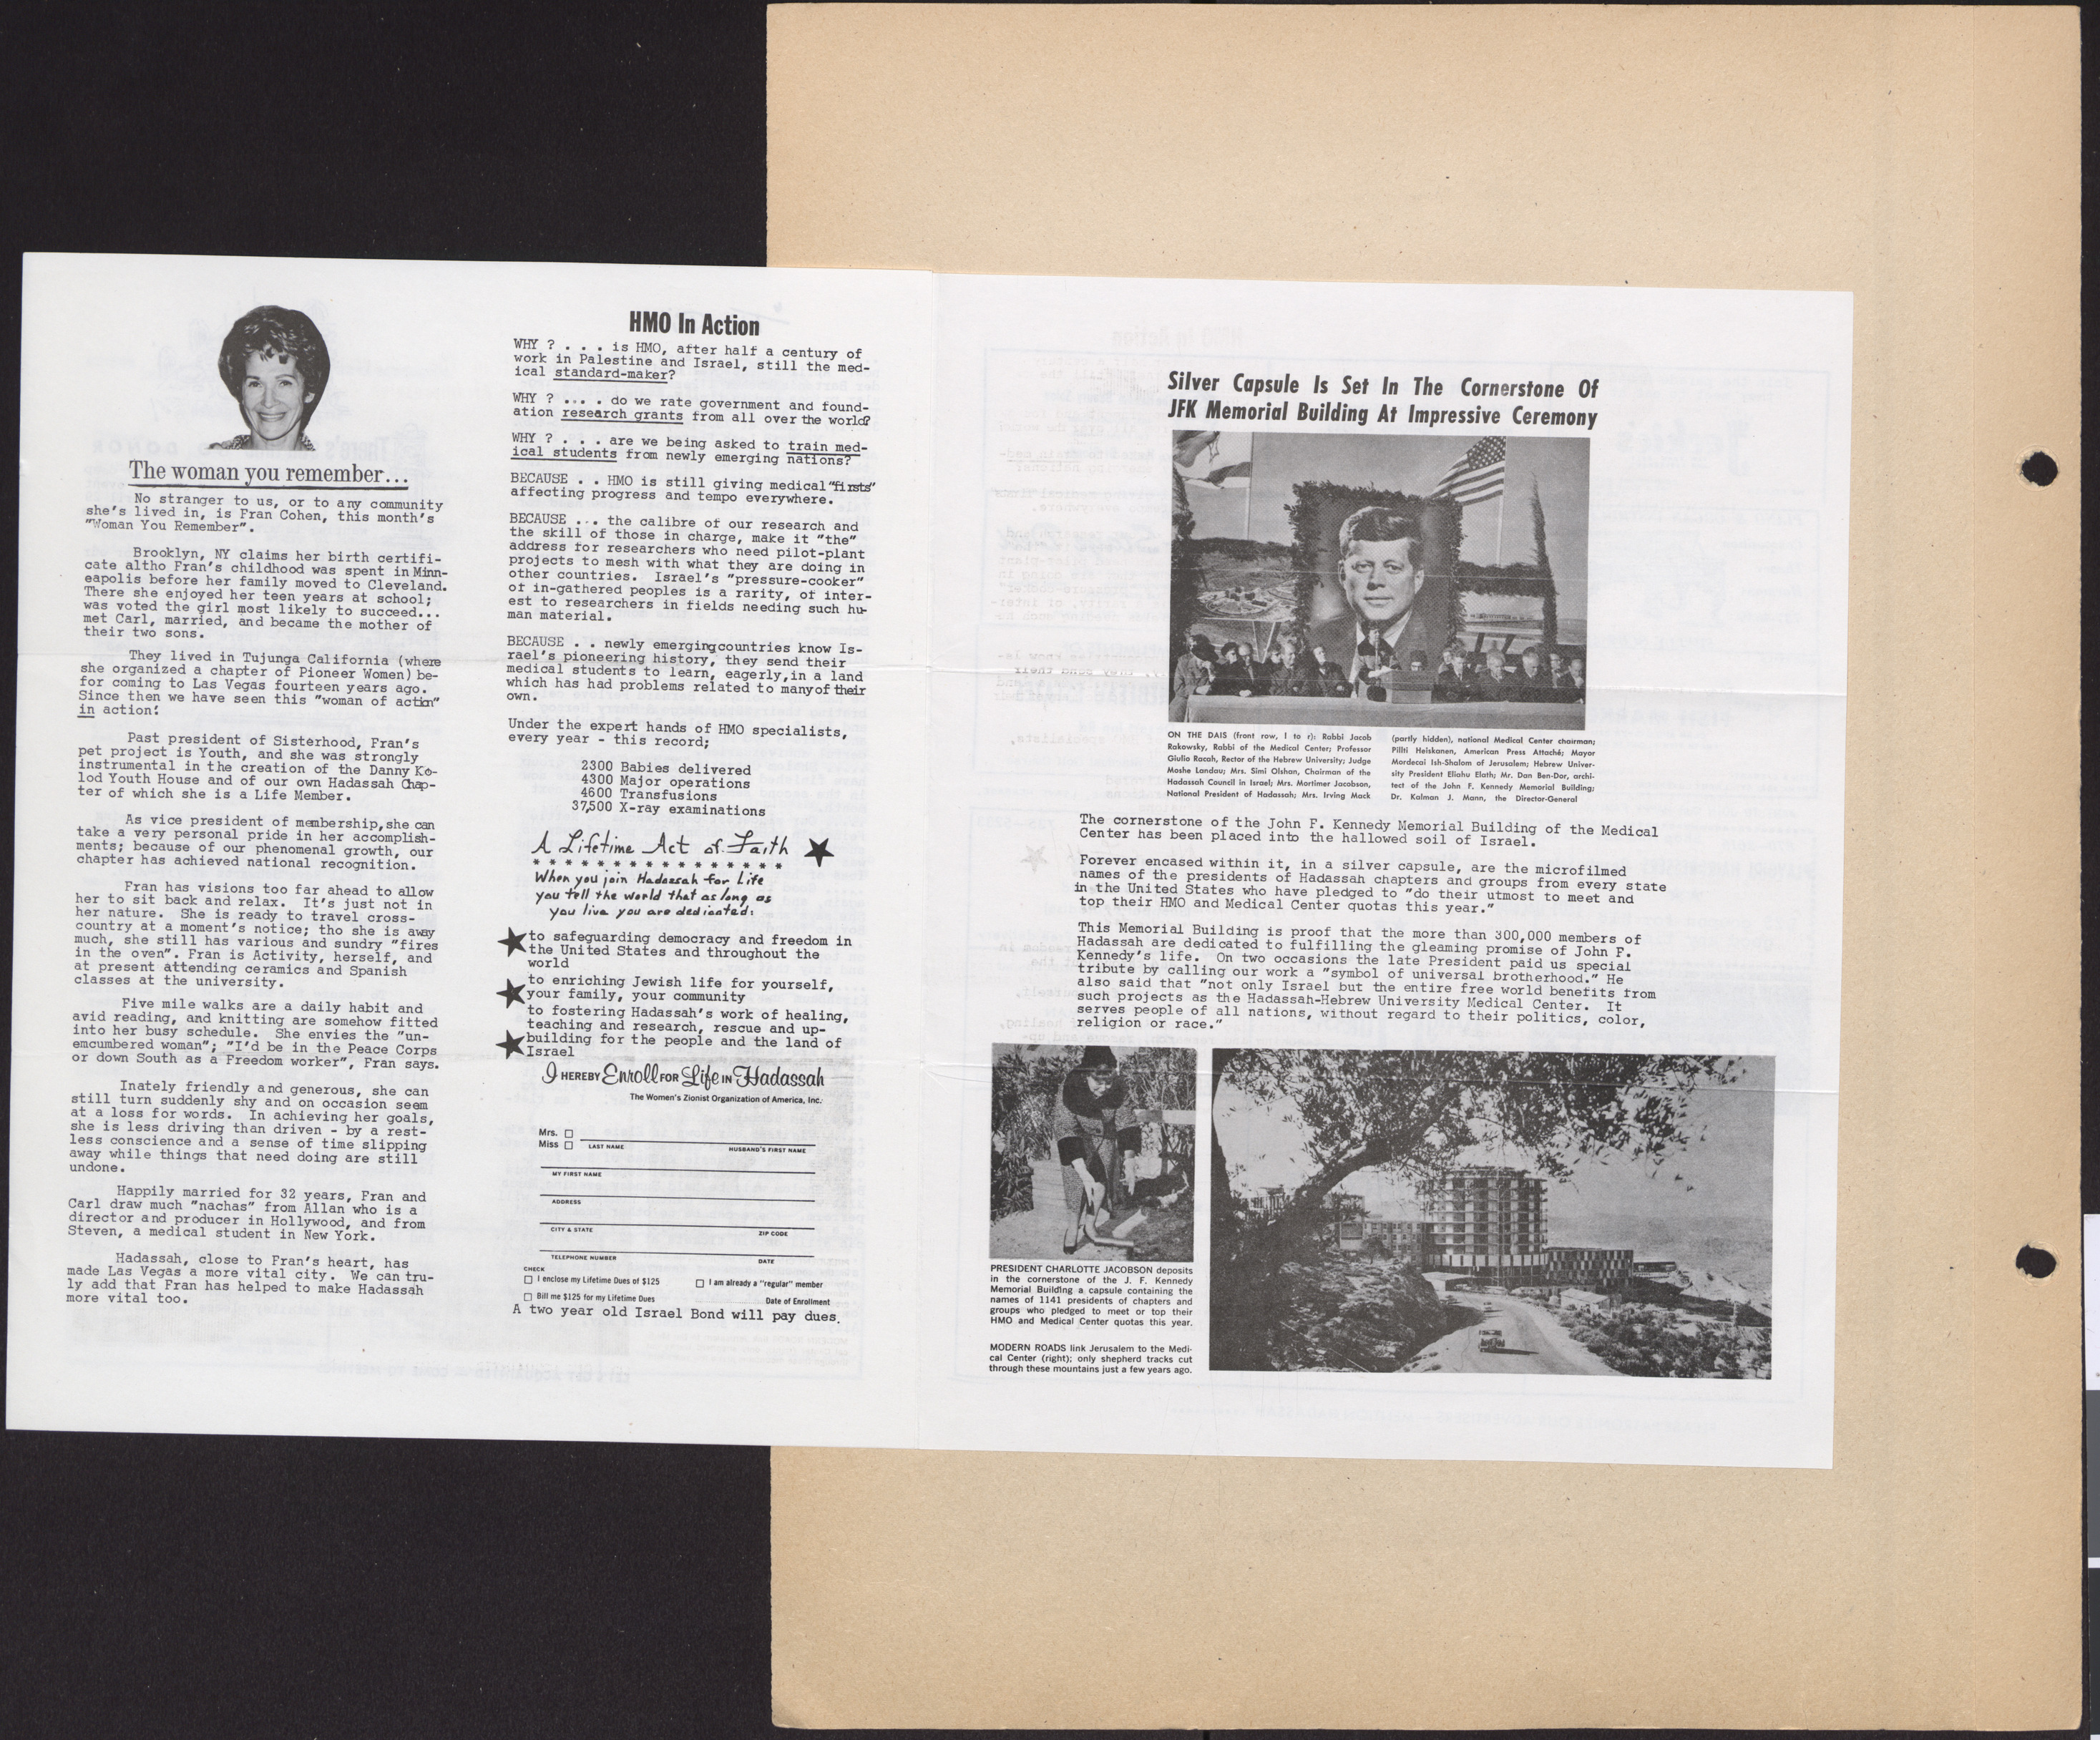 Hadassah Las Vegas Chapter newsletter, March 1965, 4-5